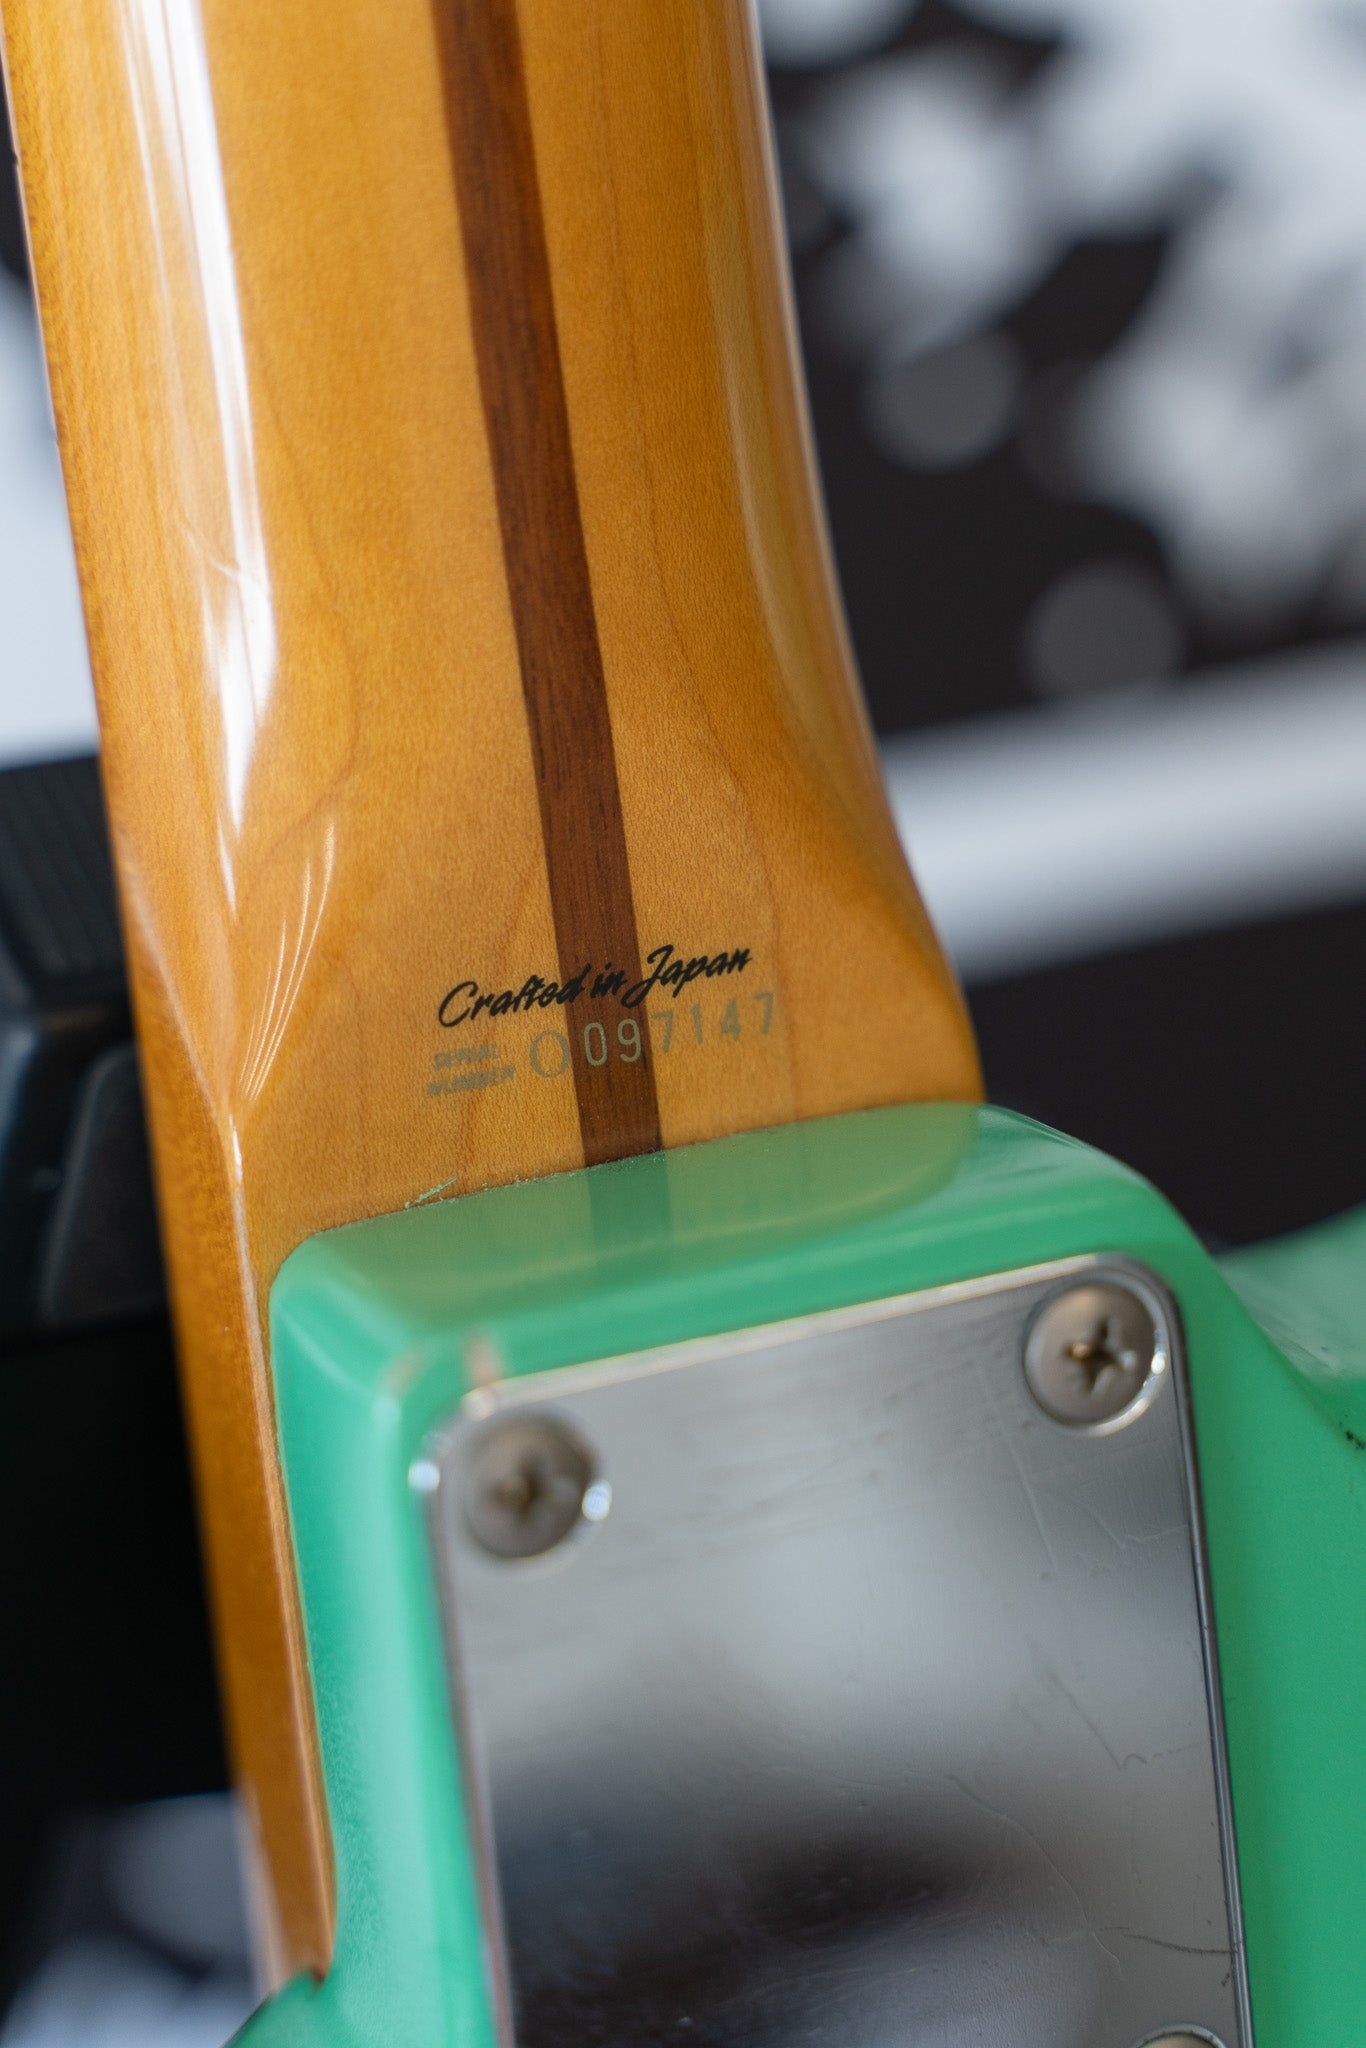 90's Stratocaster '57 Reissue CIJ - Seafoam Green (Used)